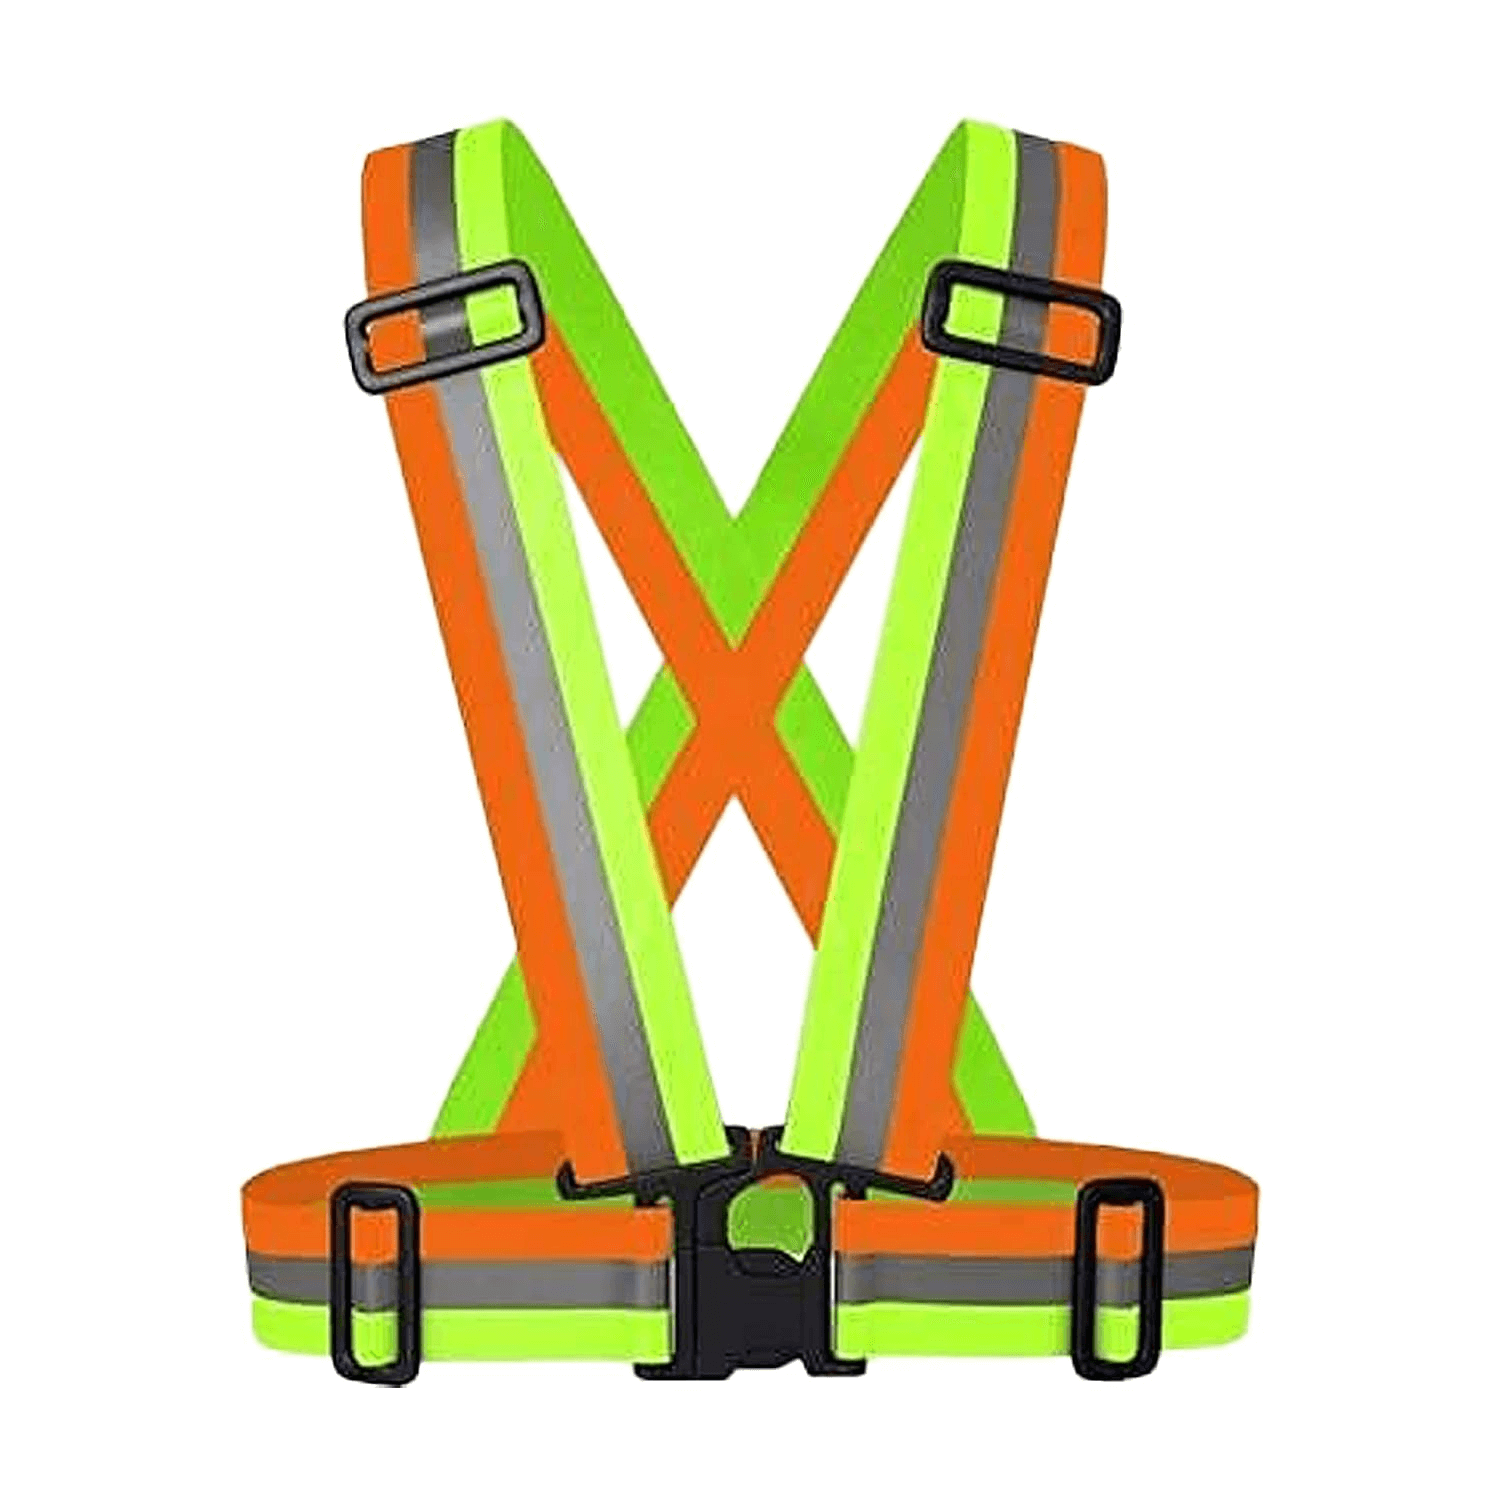 robustt-high-visibility-dual-color-protective-safety-reflective-vest-belt-jacket-night-cycling-reflector-strips-cross-belt-stripes-adjustable-vest-safety-jacket-pack-of-1